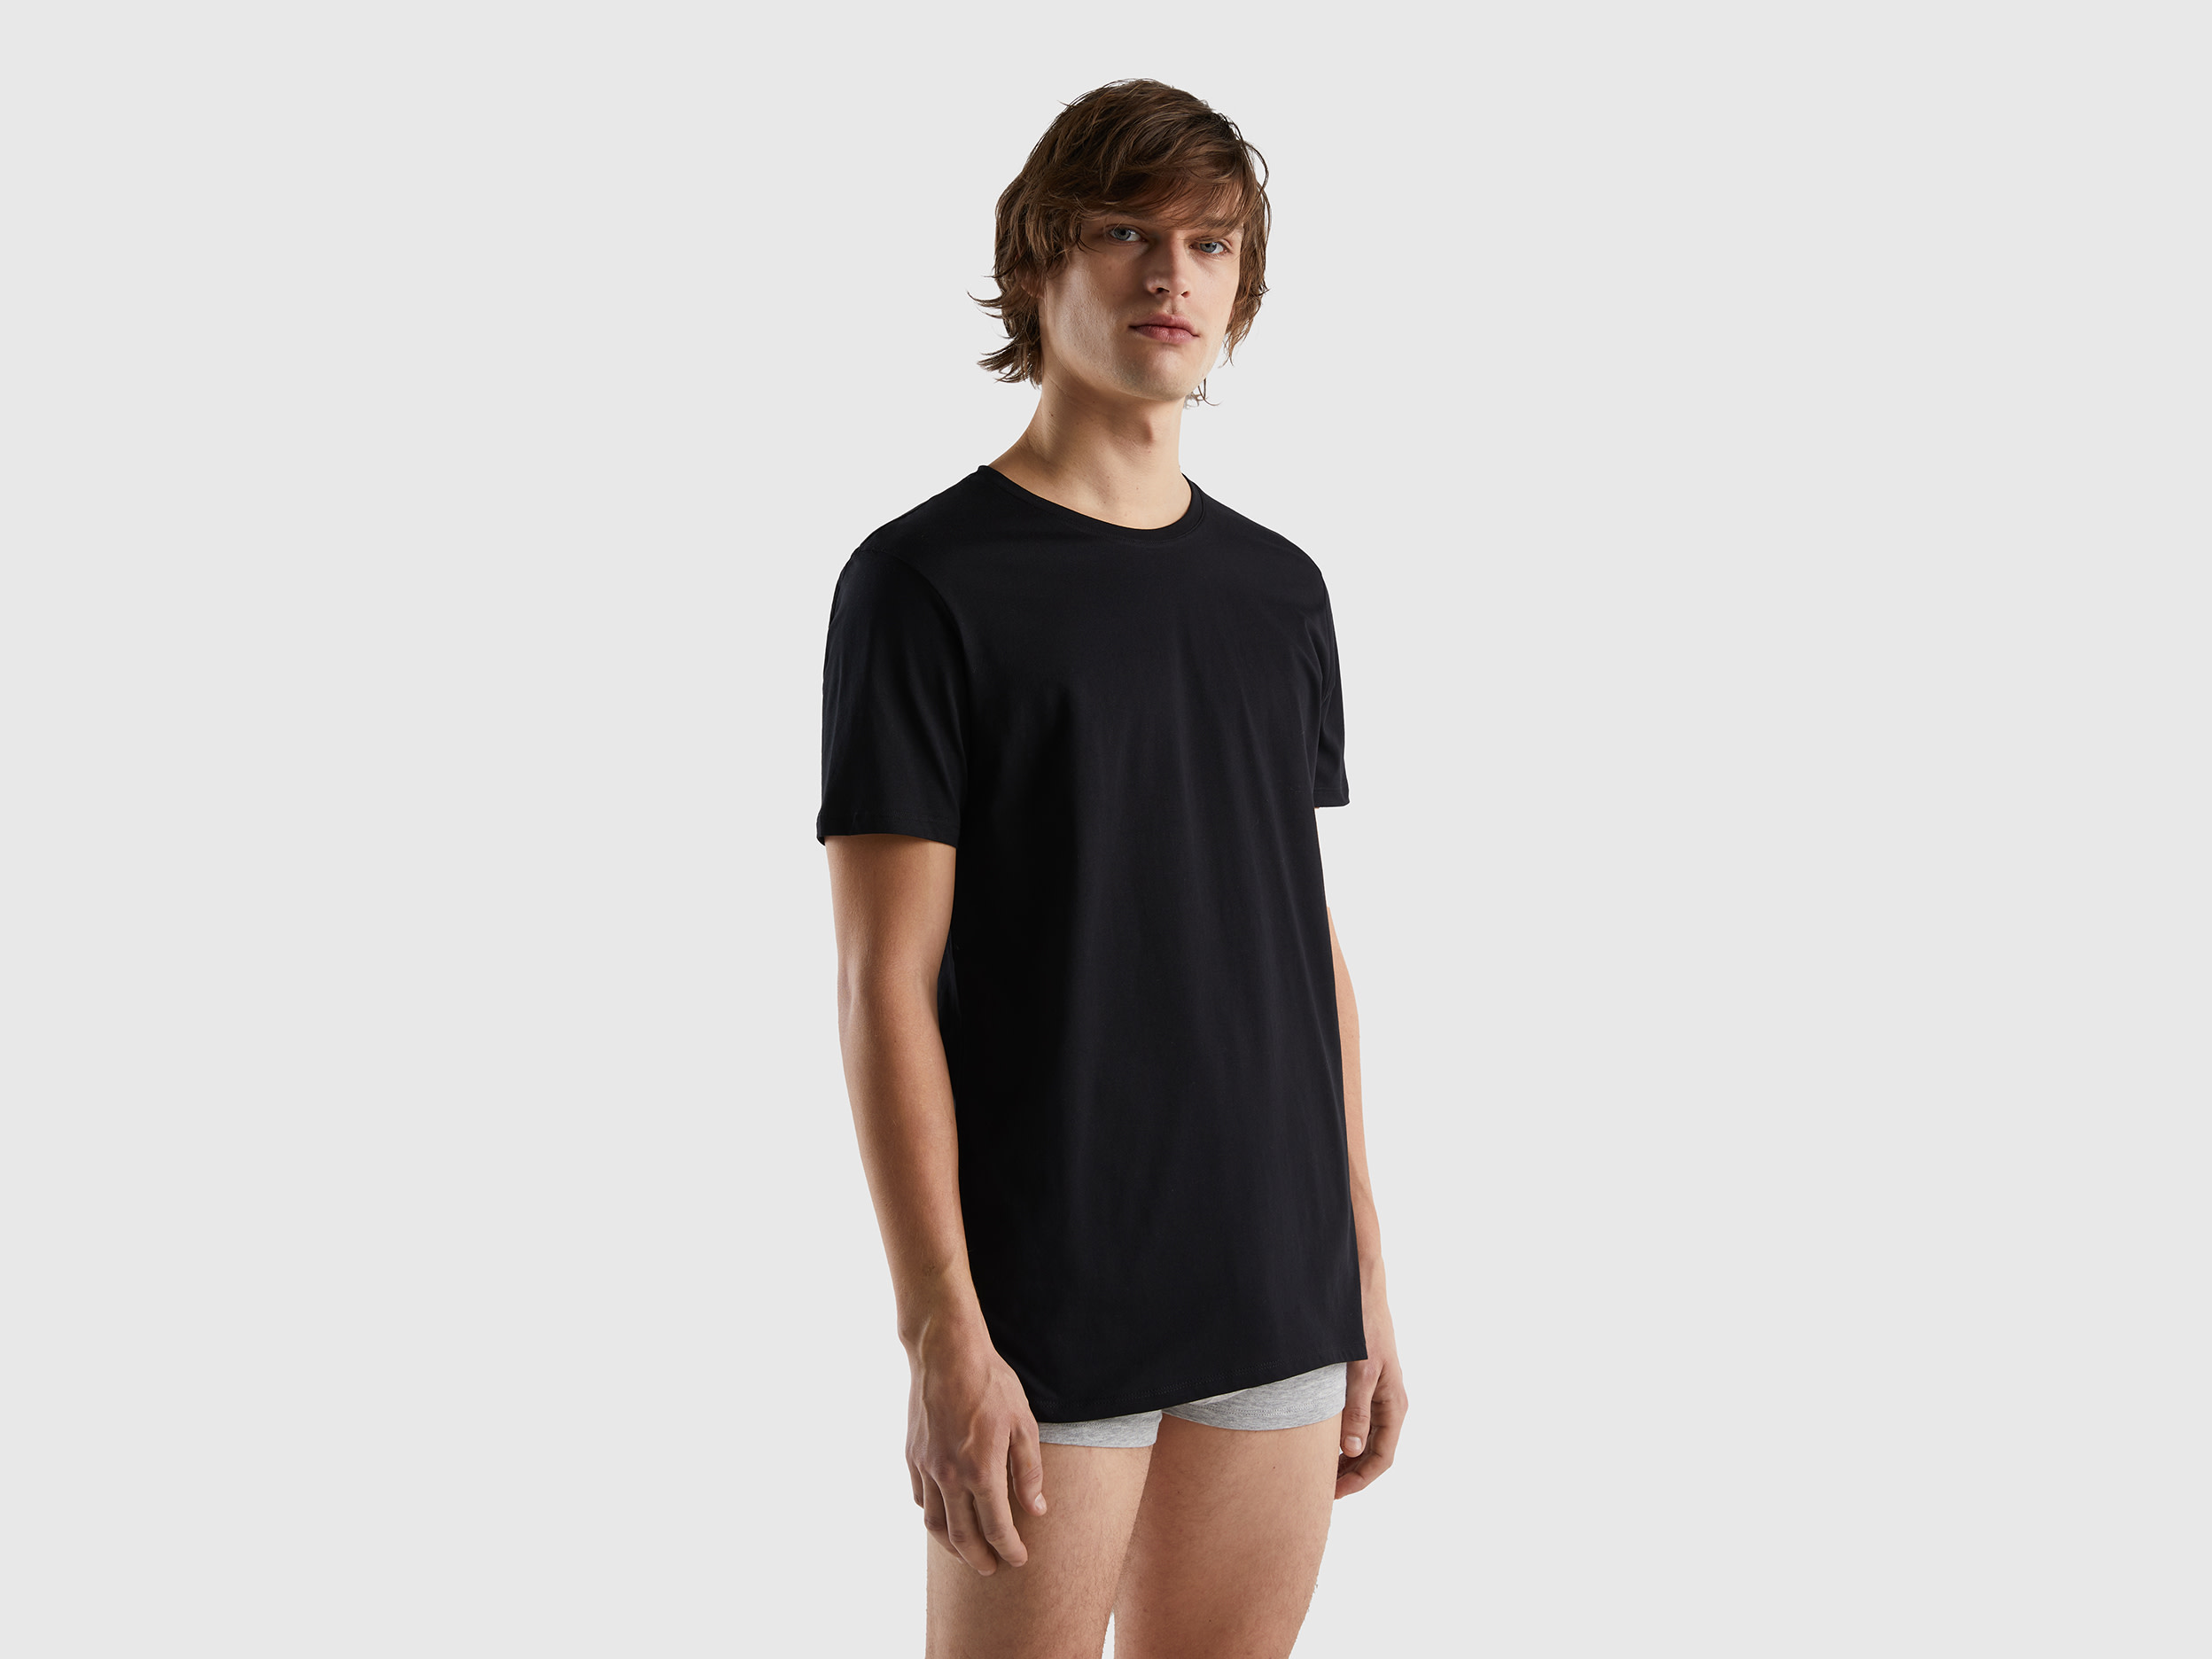 Benetton, Long Fiber Cotton T-shirt, size XXL, Black, Men